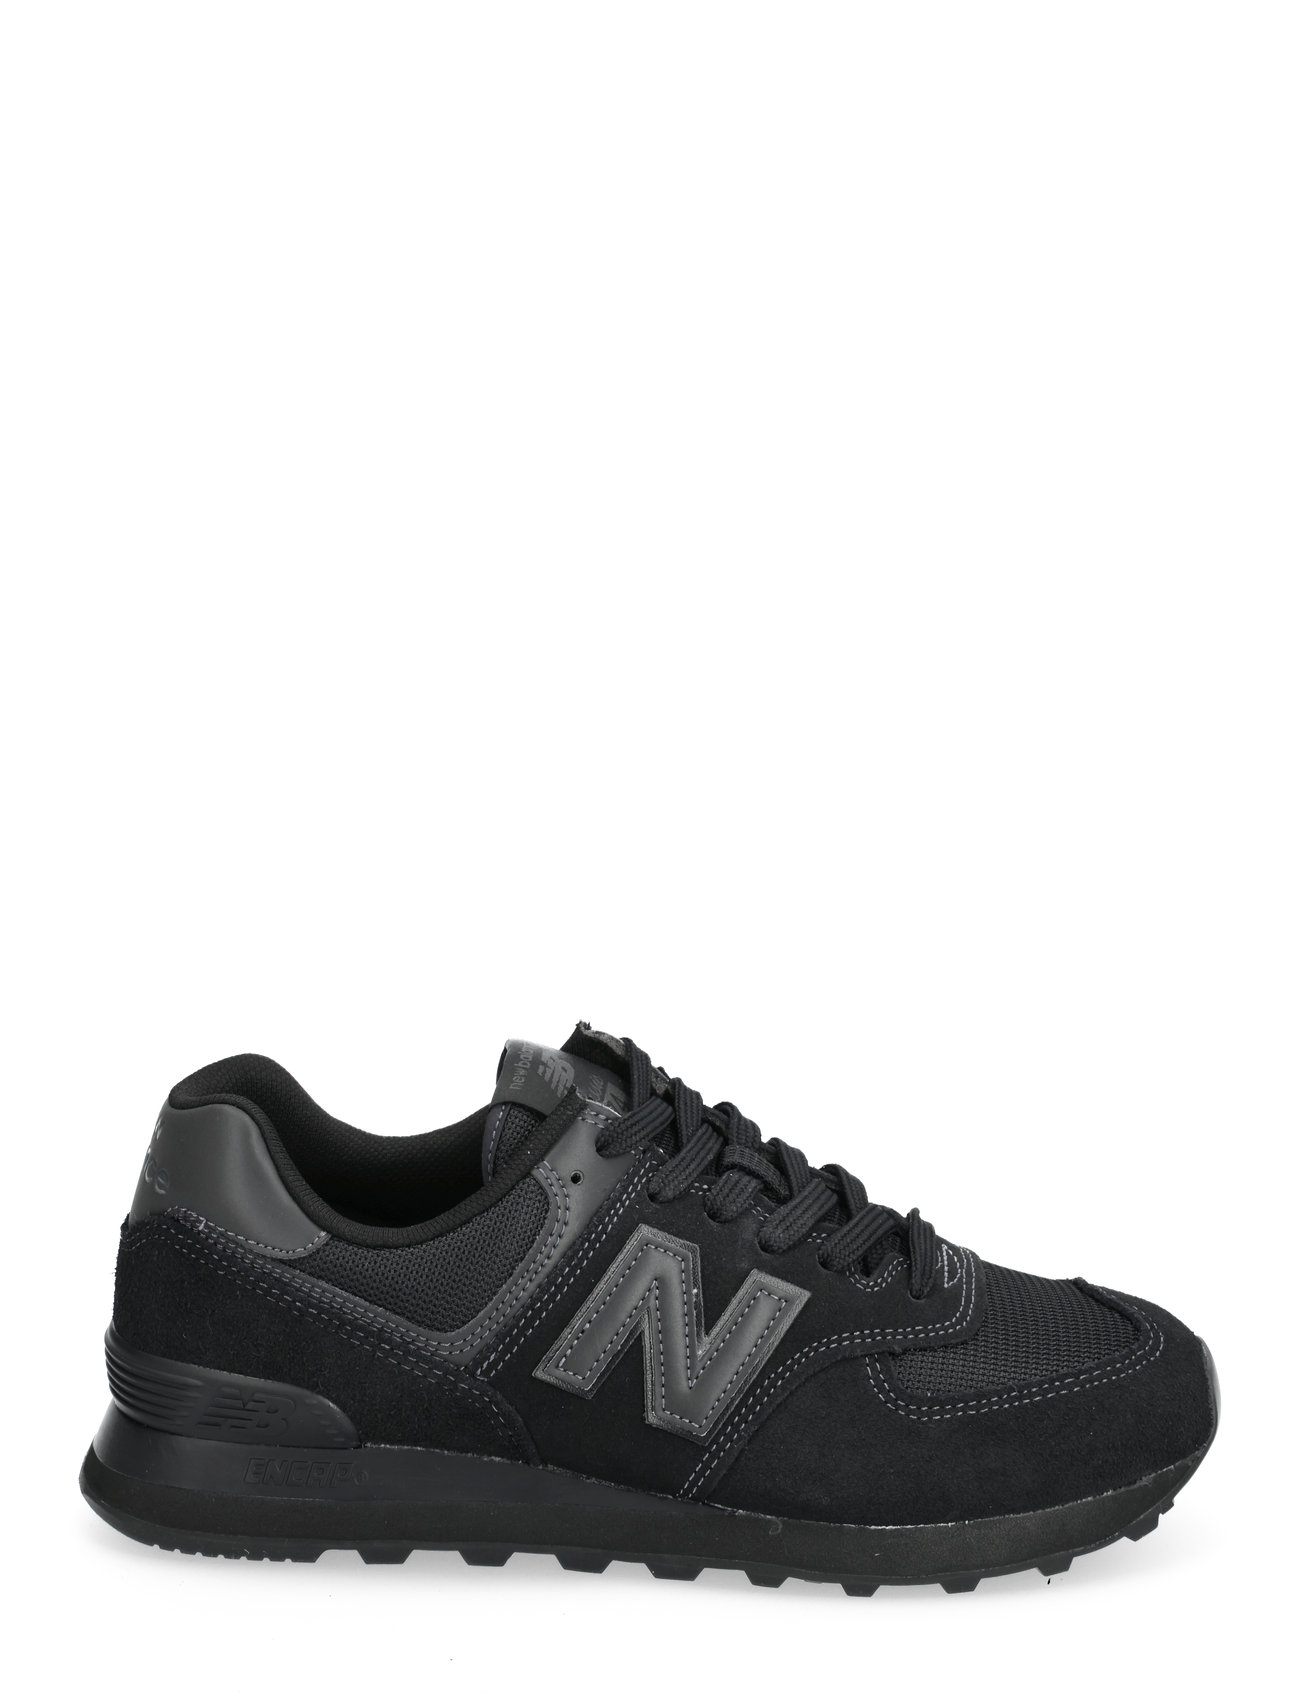 "New Balance" Balance 574 Sport Sneakers Low-top Black New